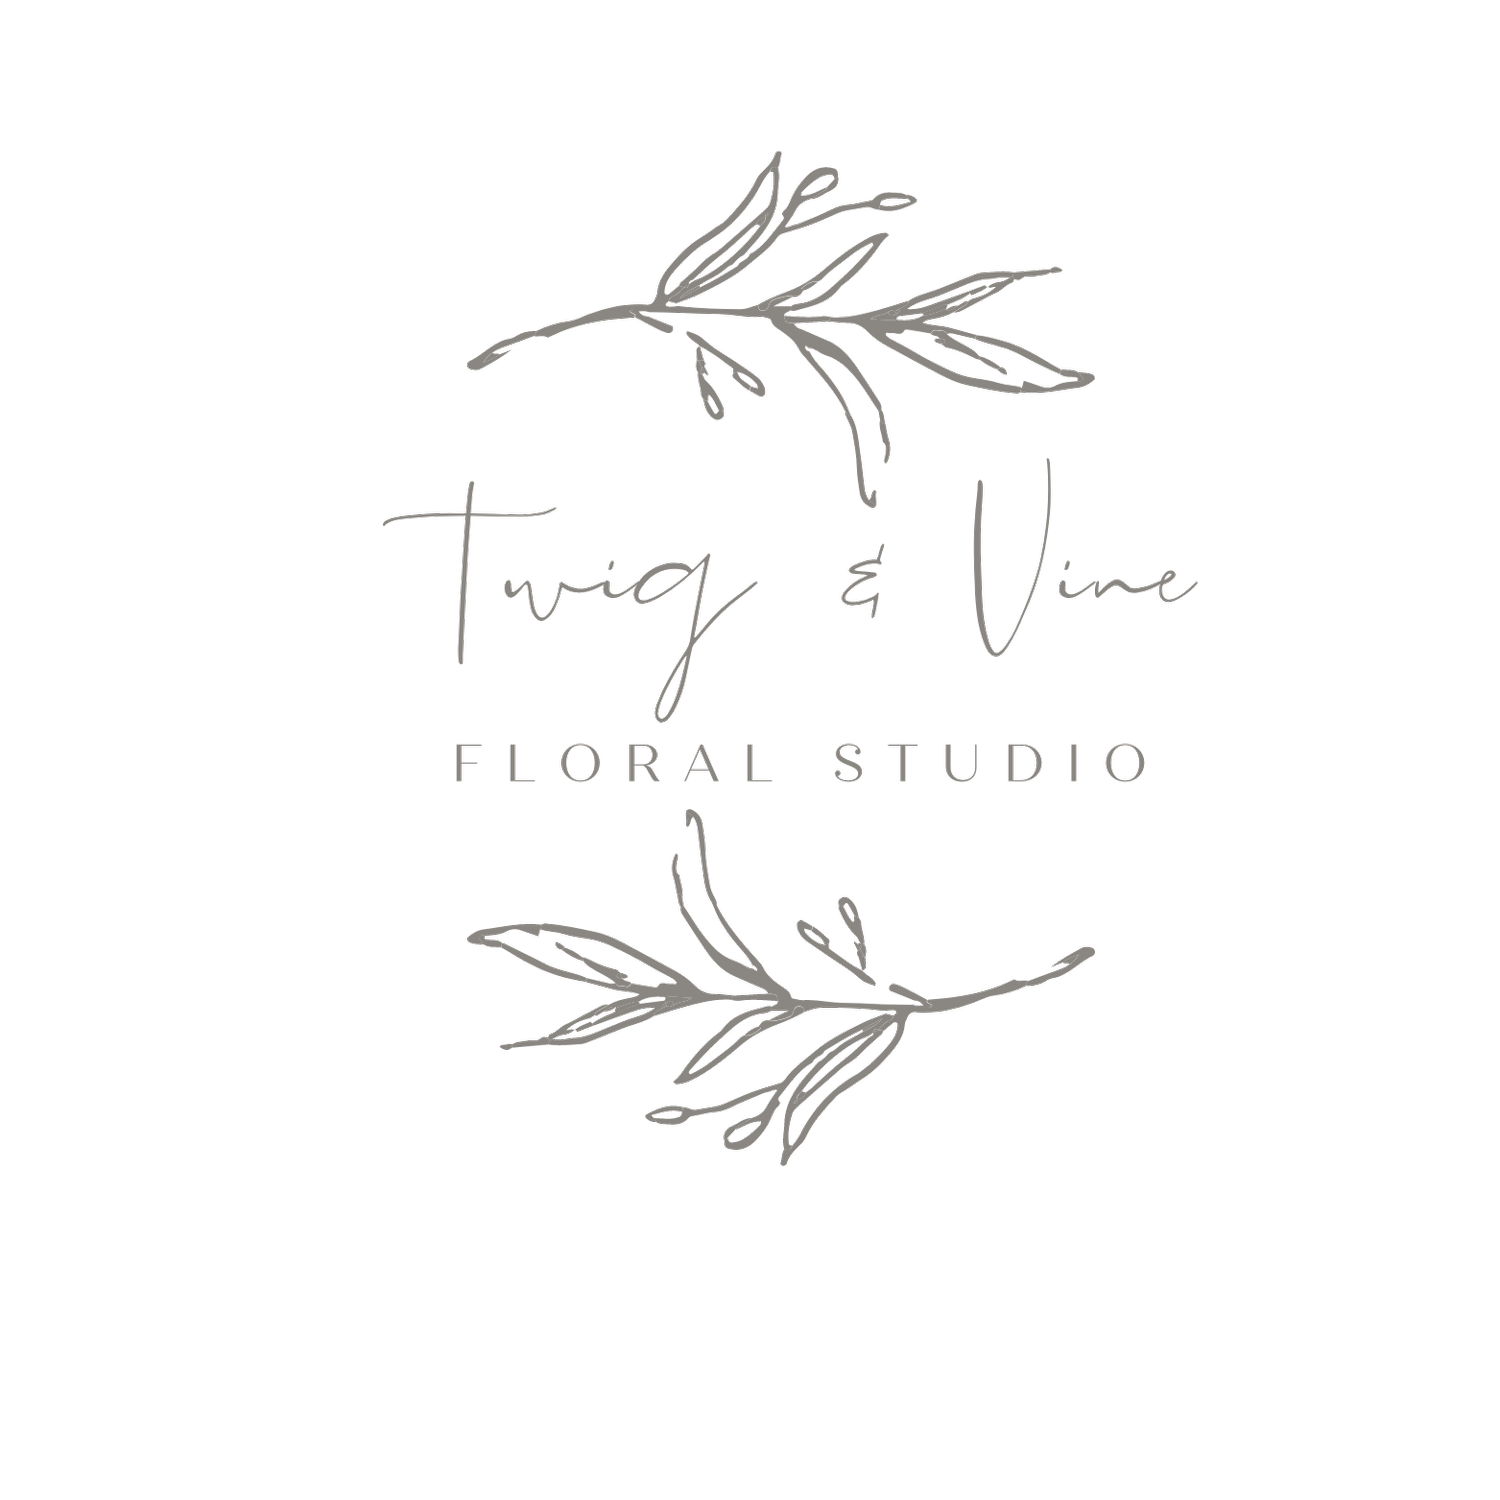 Twig and Vine Floral Studio